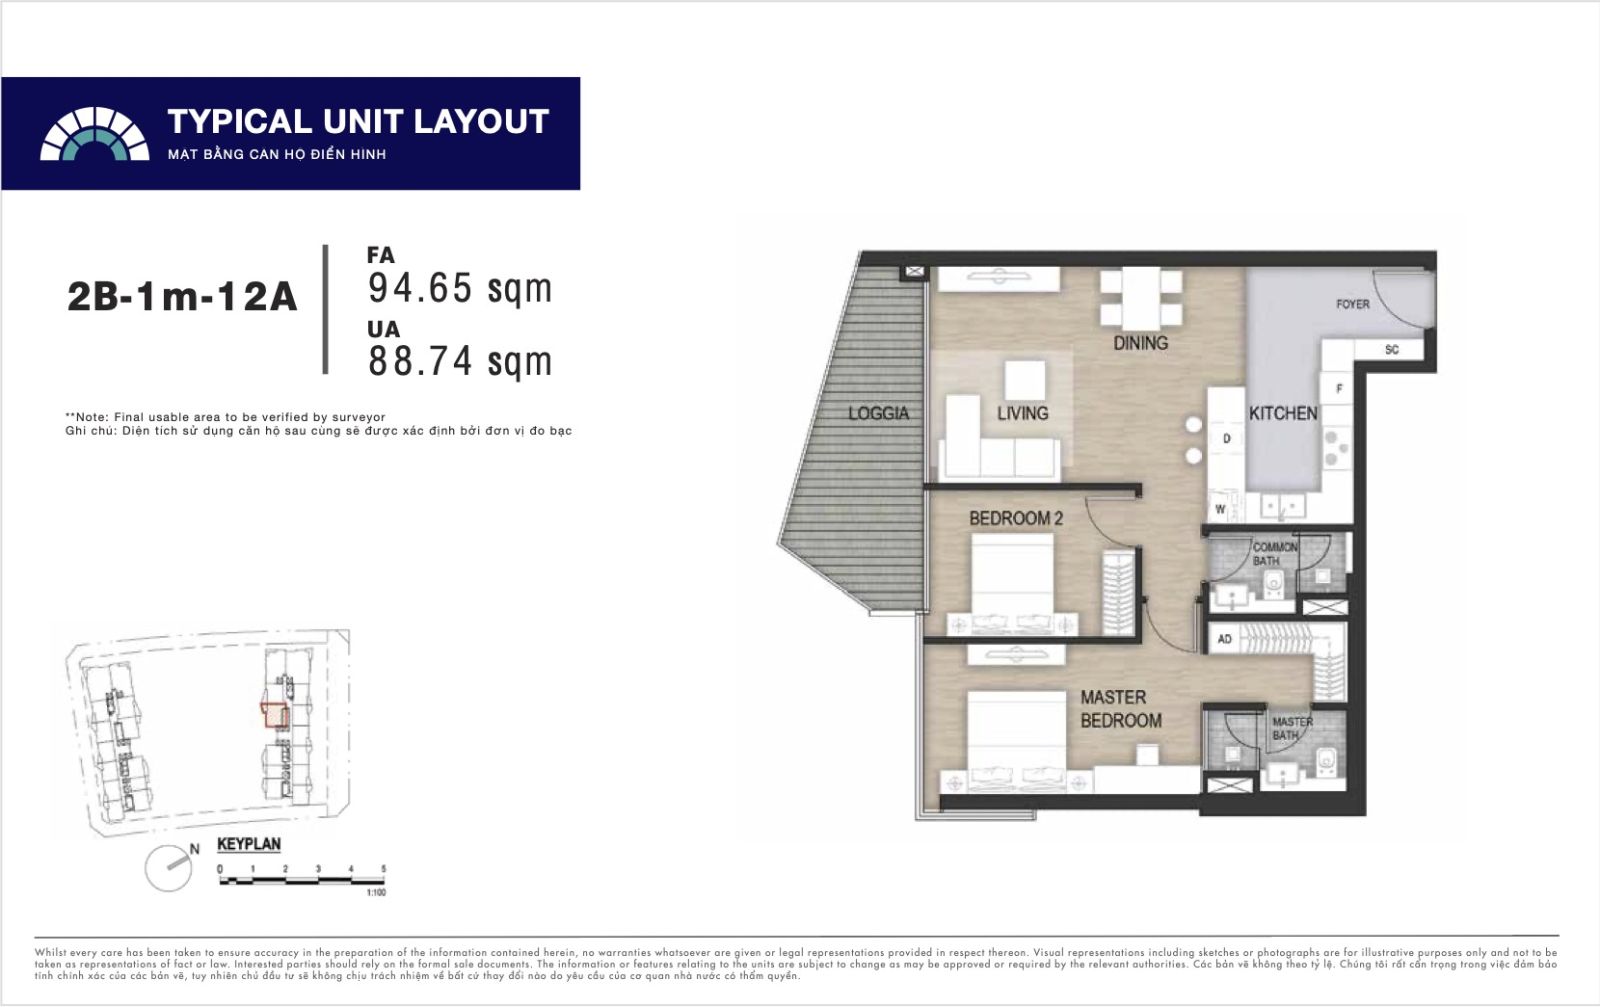  layout 2 phong ngu opera residence can 01